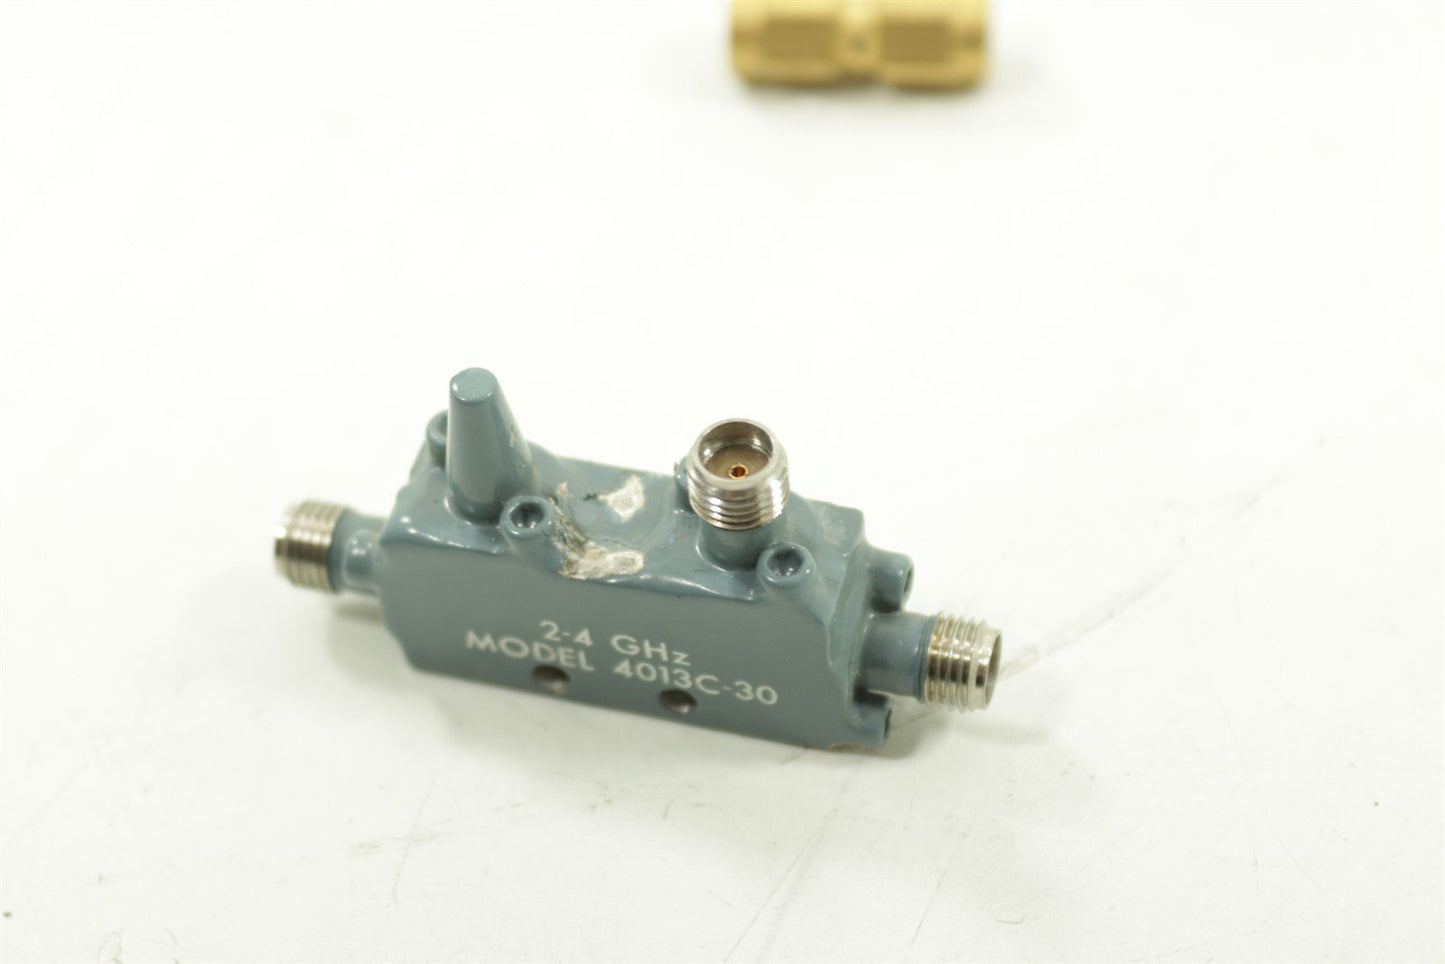 Narda 4013C-30 30dB Directional Coupler 2 - 4 GHz